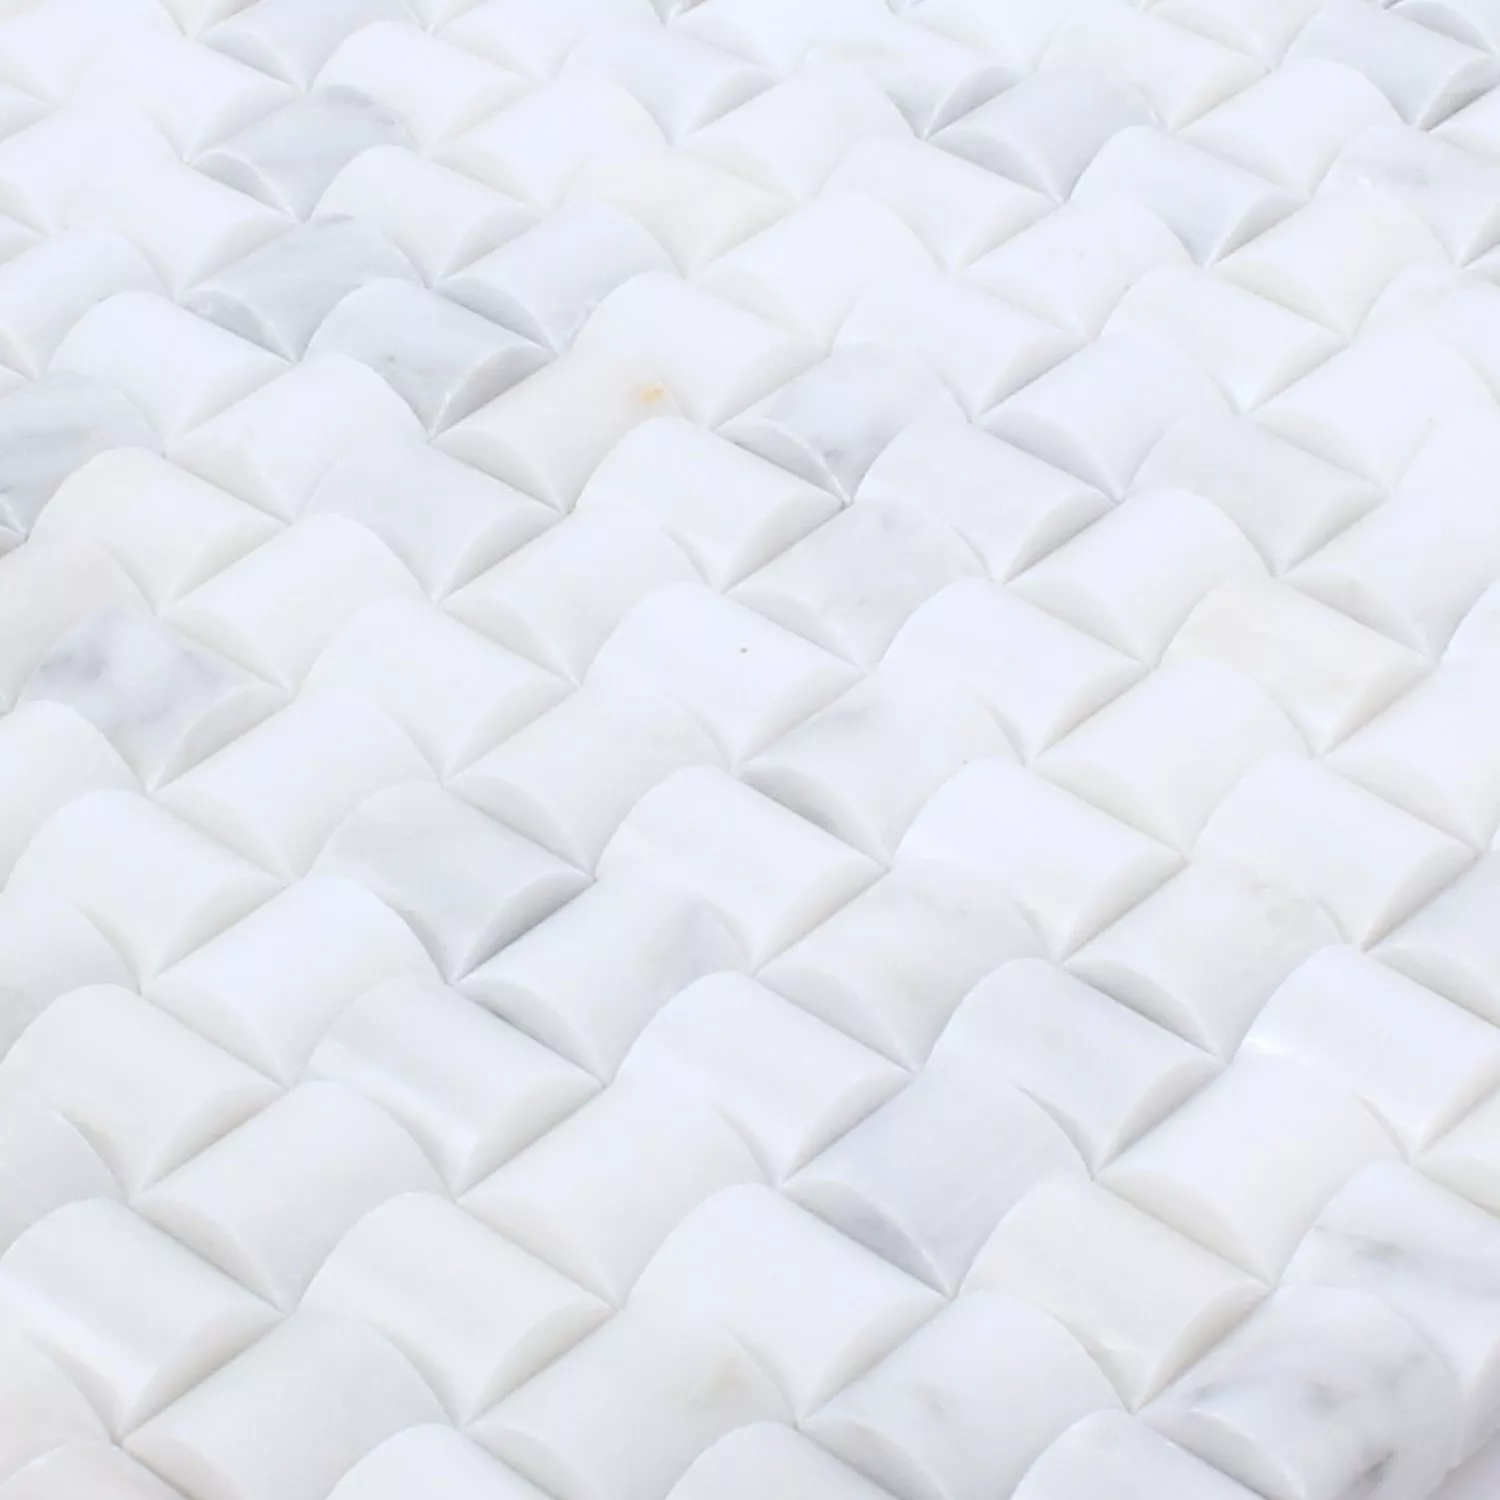 Sample Mosaic Tiles Natural Stone Everest D White